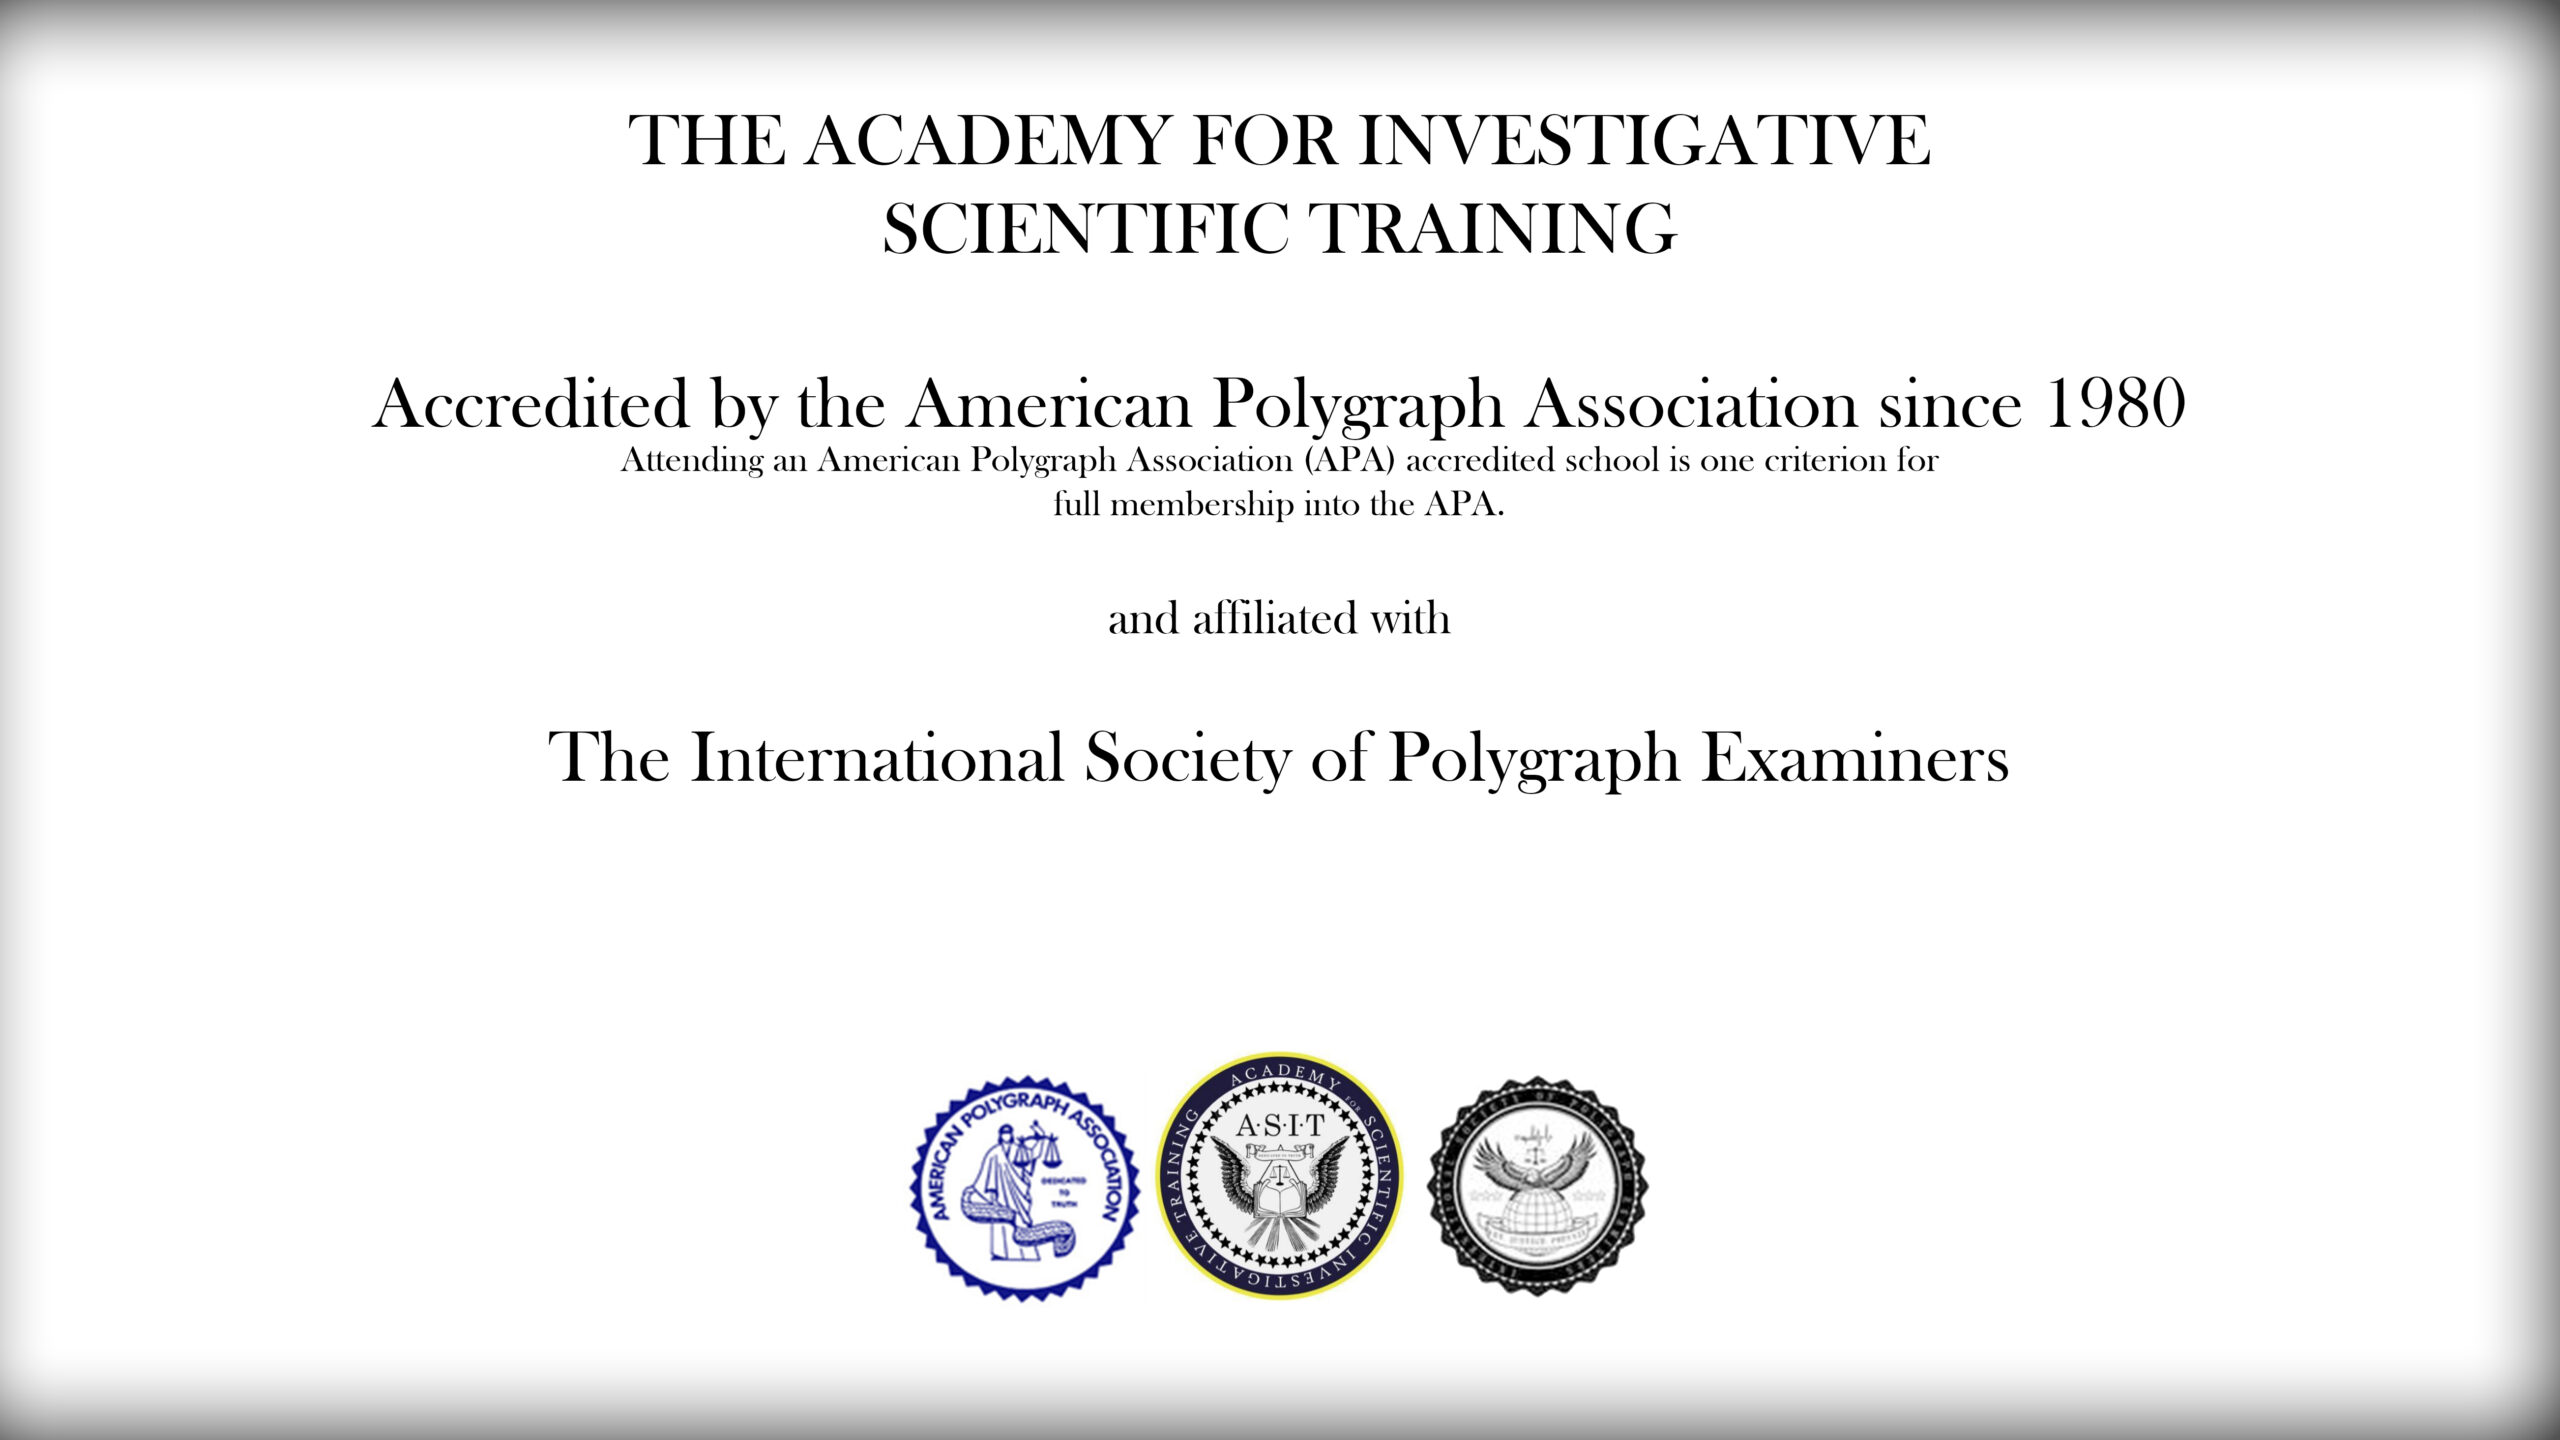 Academy of Scientific Investigative Training Recognition